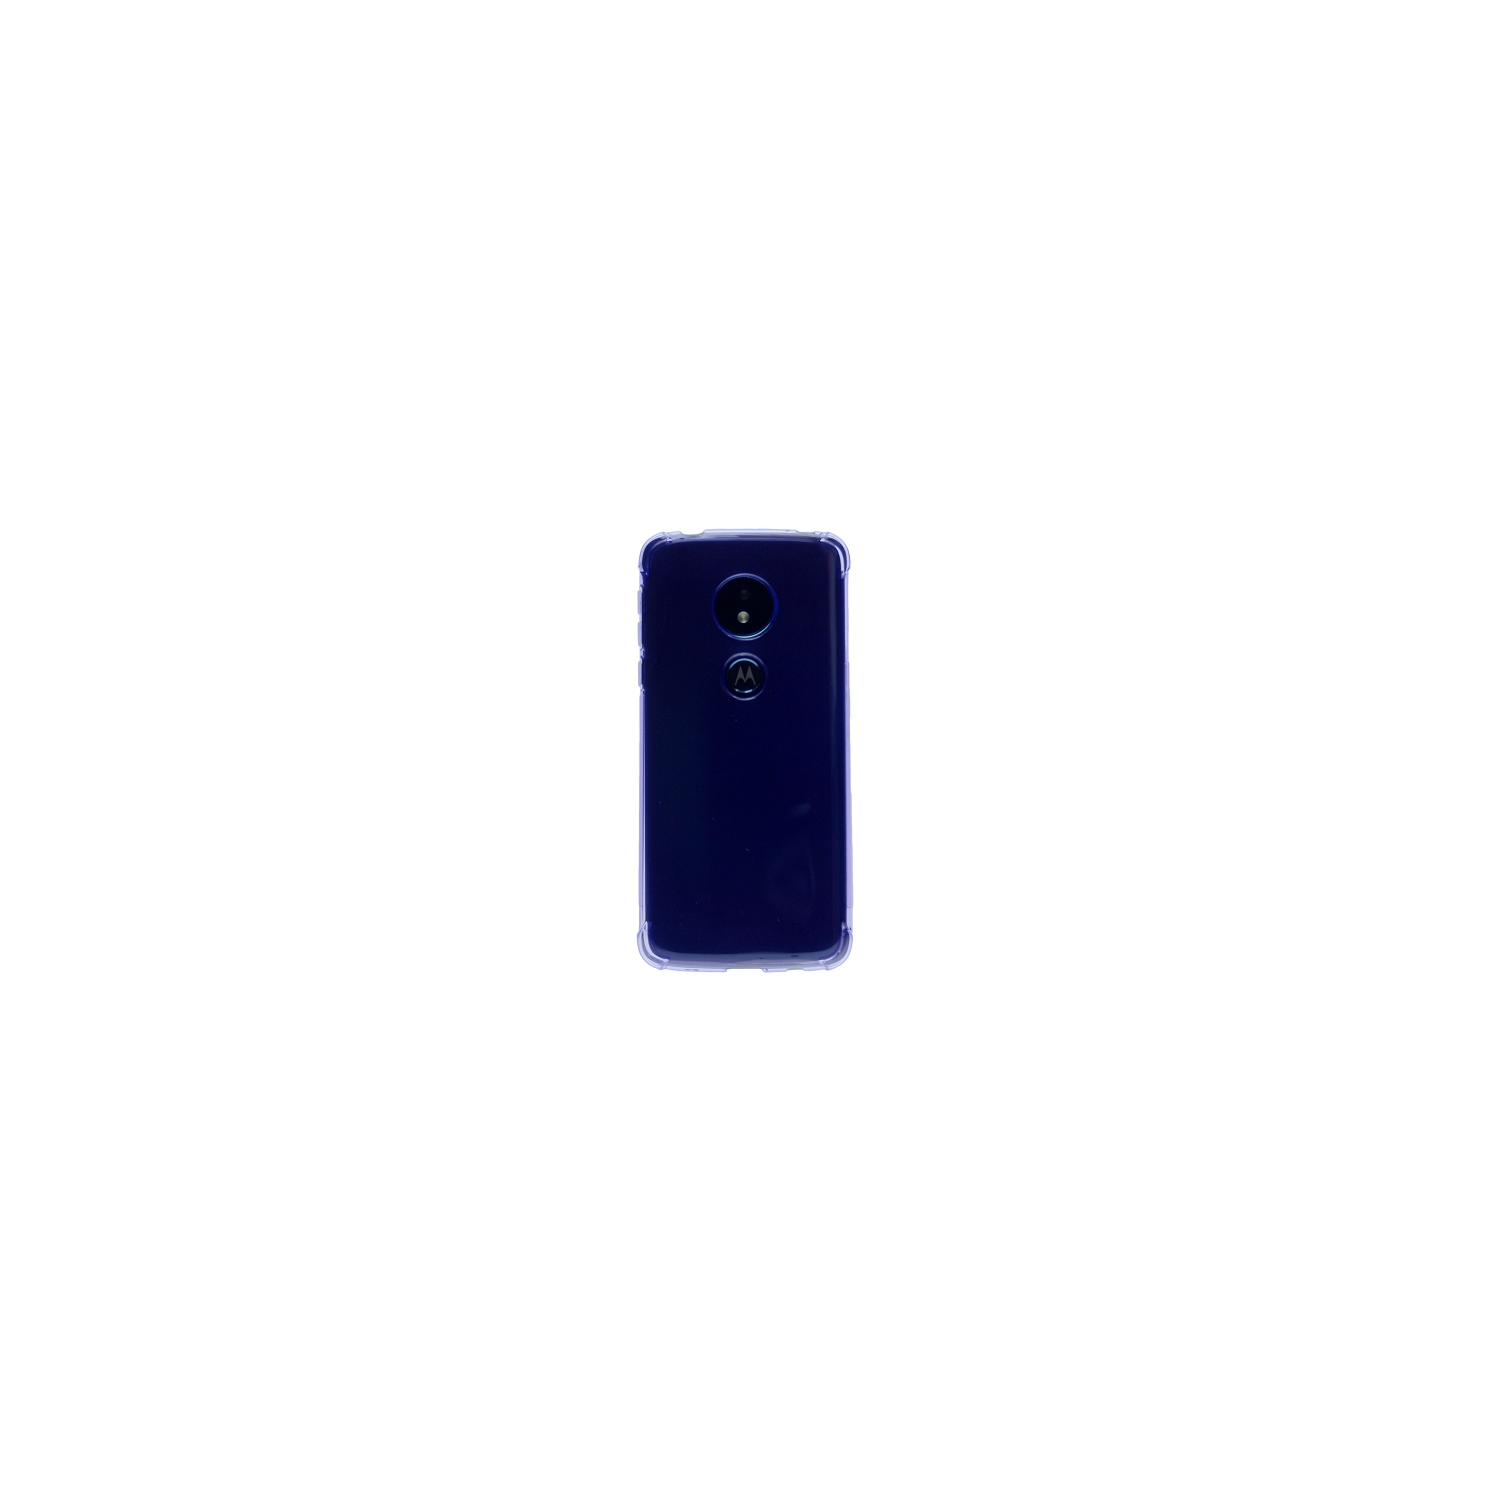 (Canadain Version) Motorola G6 Play Soft TPU Case, w/Extra Corner Protection, Purple